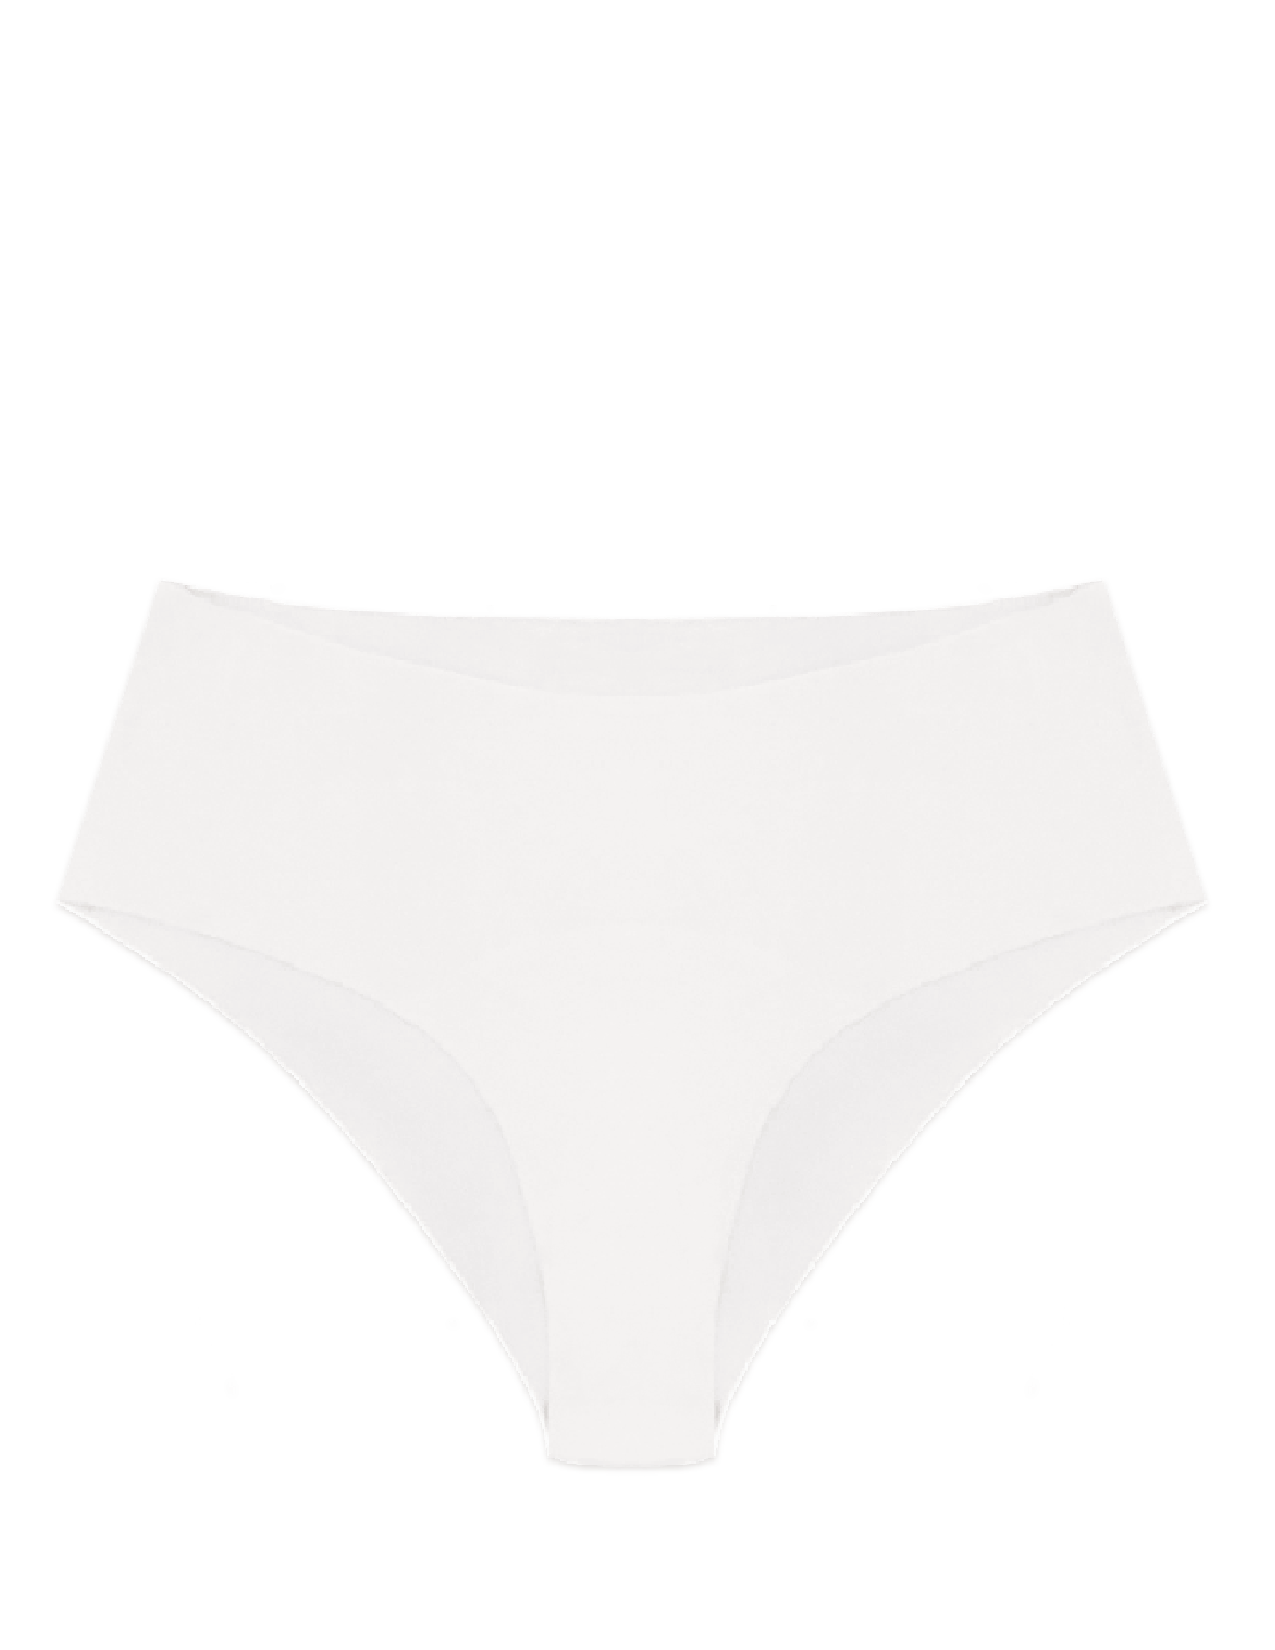 Buy Fshway Seamless Cotton Underwear Women No Show Panties